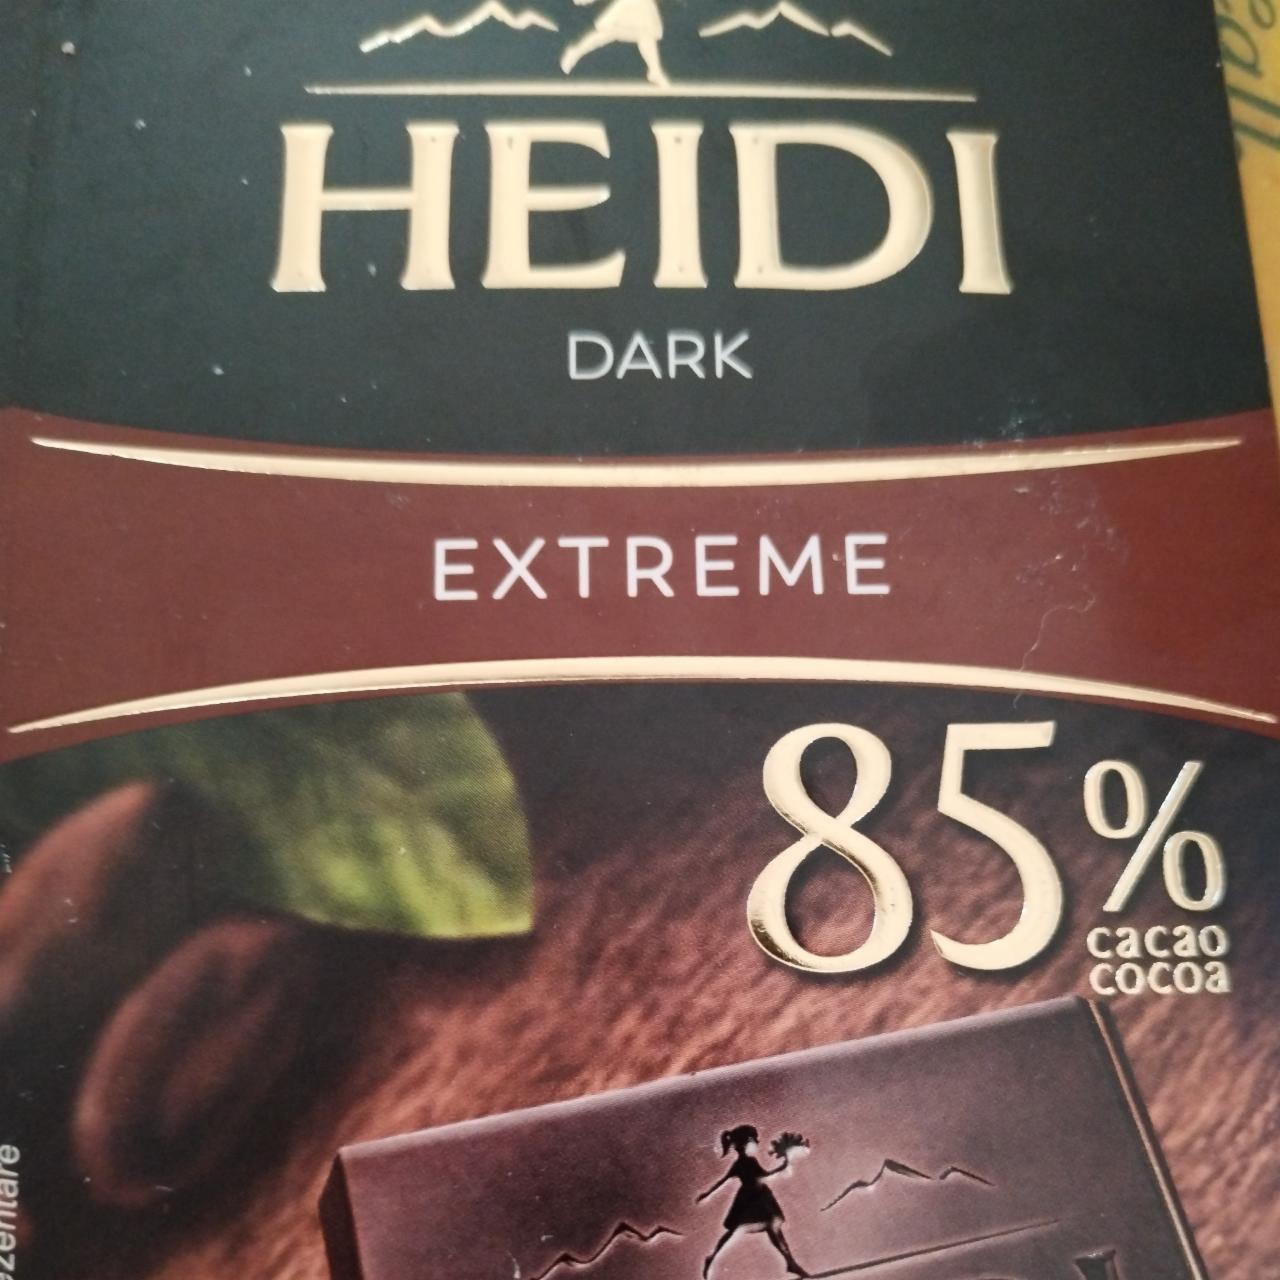 Képek - Heidi dark extreme 85%